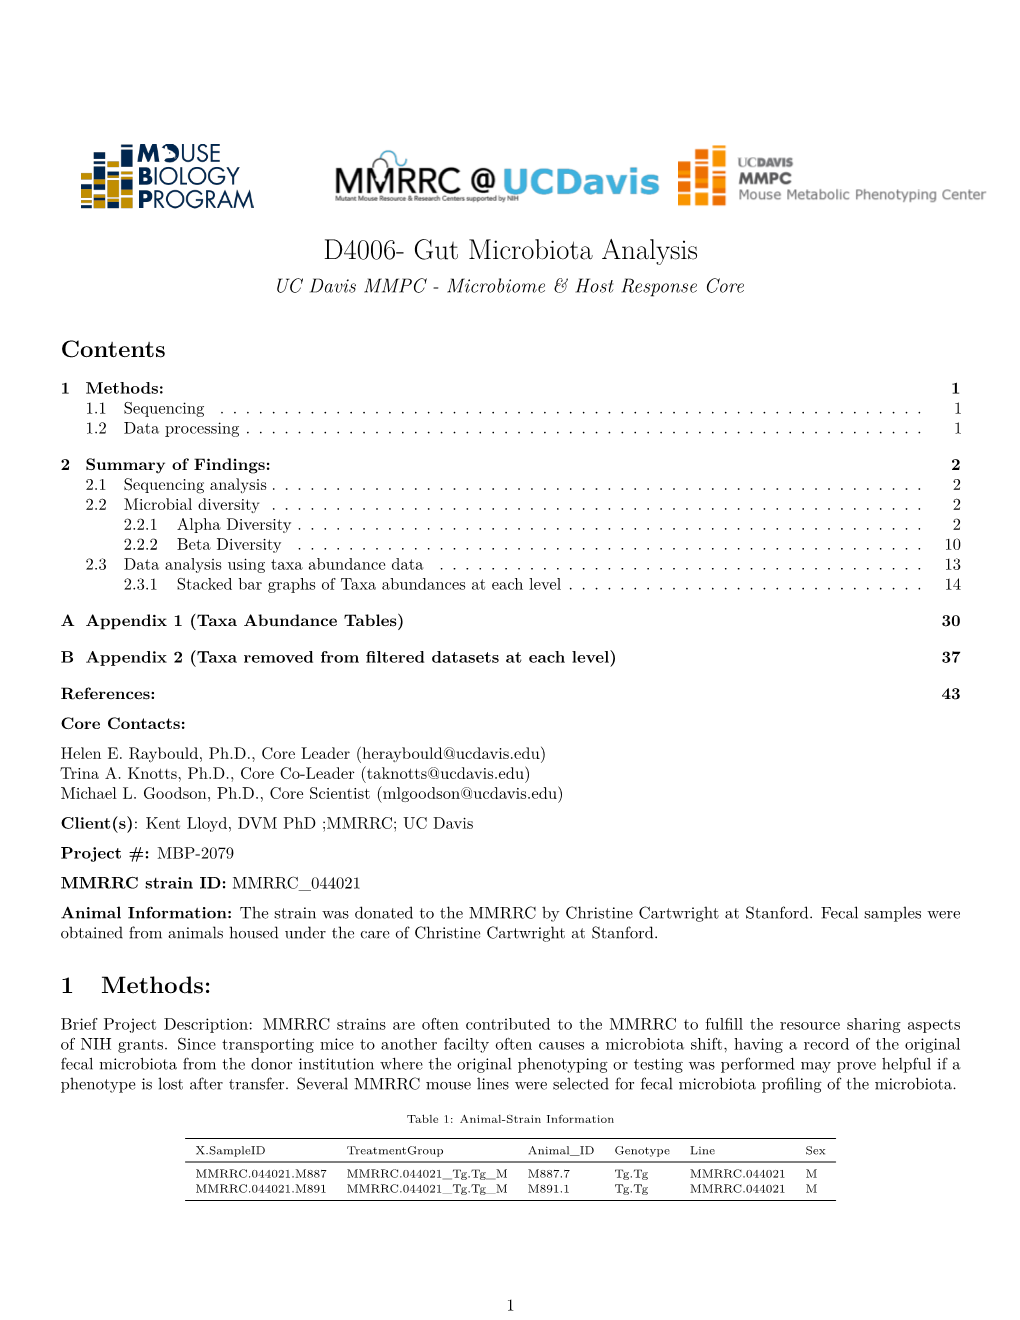 Gut Microbiota Analysis UC Davis MMPC - Microbiome & Host Response Core